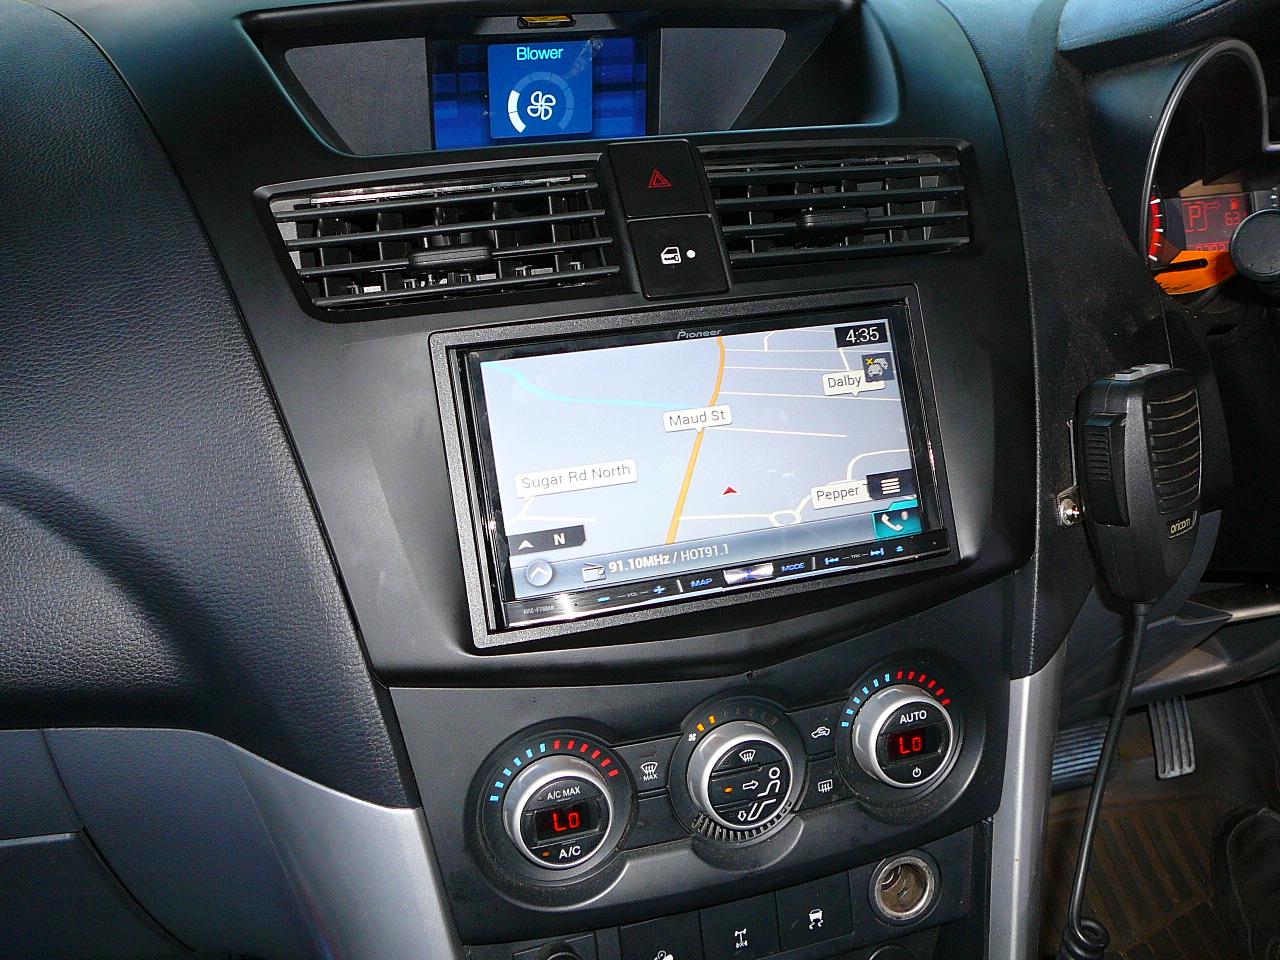 Mazda BT-50 2014, Pioneer GPS Navigation with Radio Fascia and Reverse Camera Installation